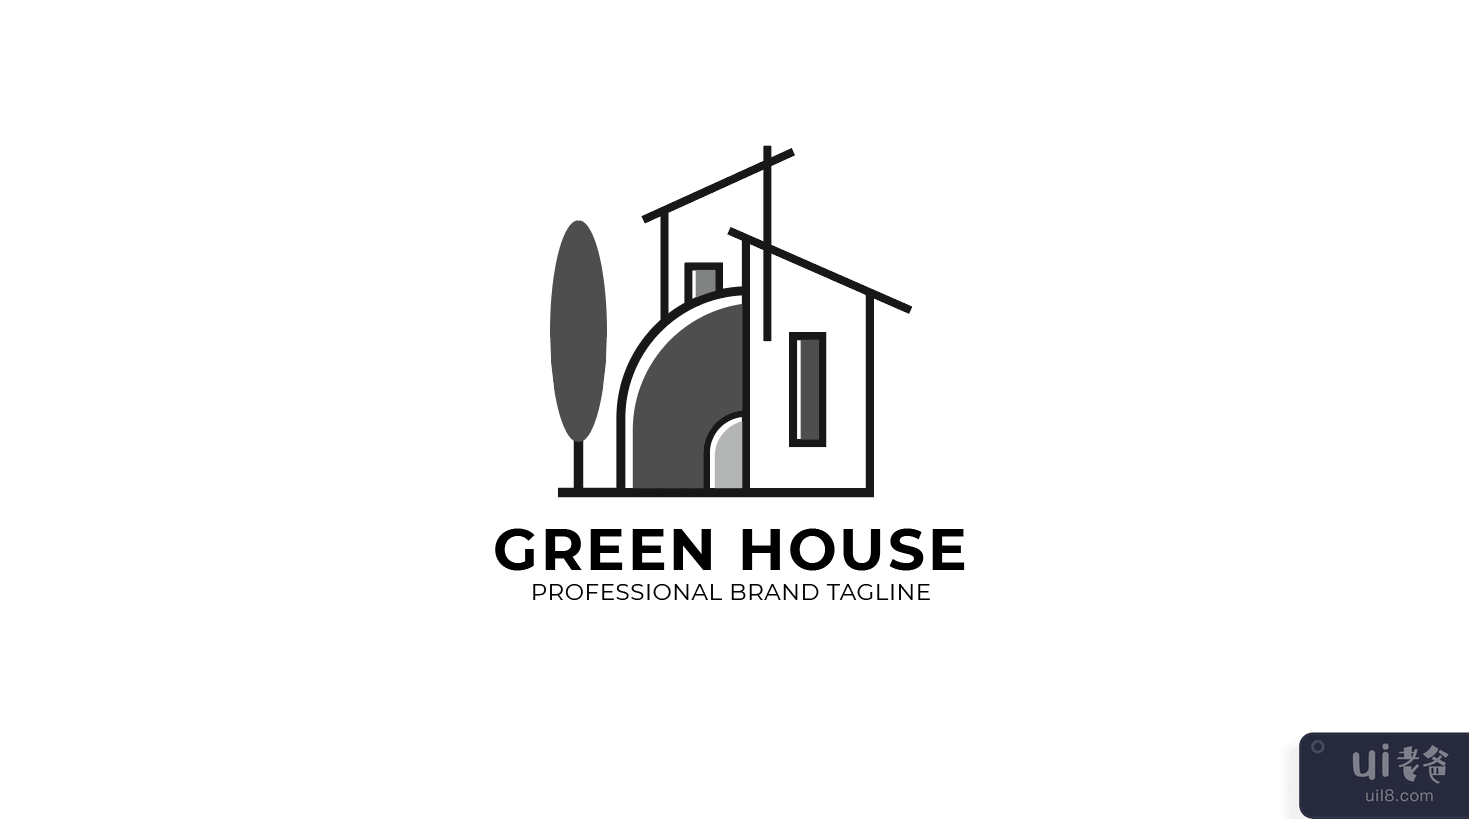 房地产标志 - 绿屋(Real Estate Logo - Green House)插图3